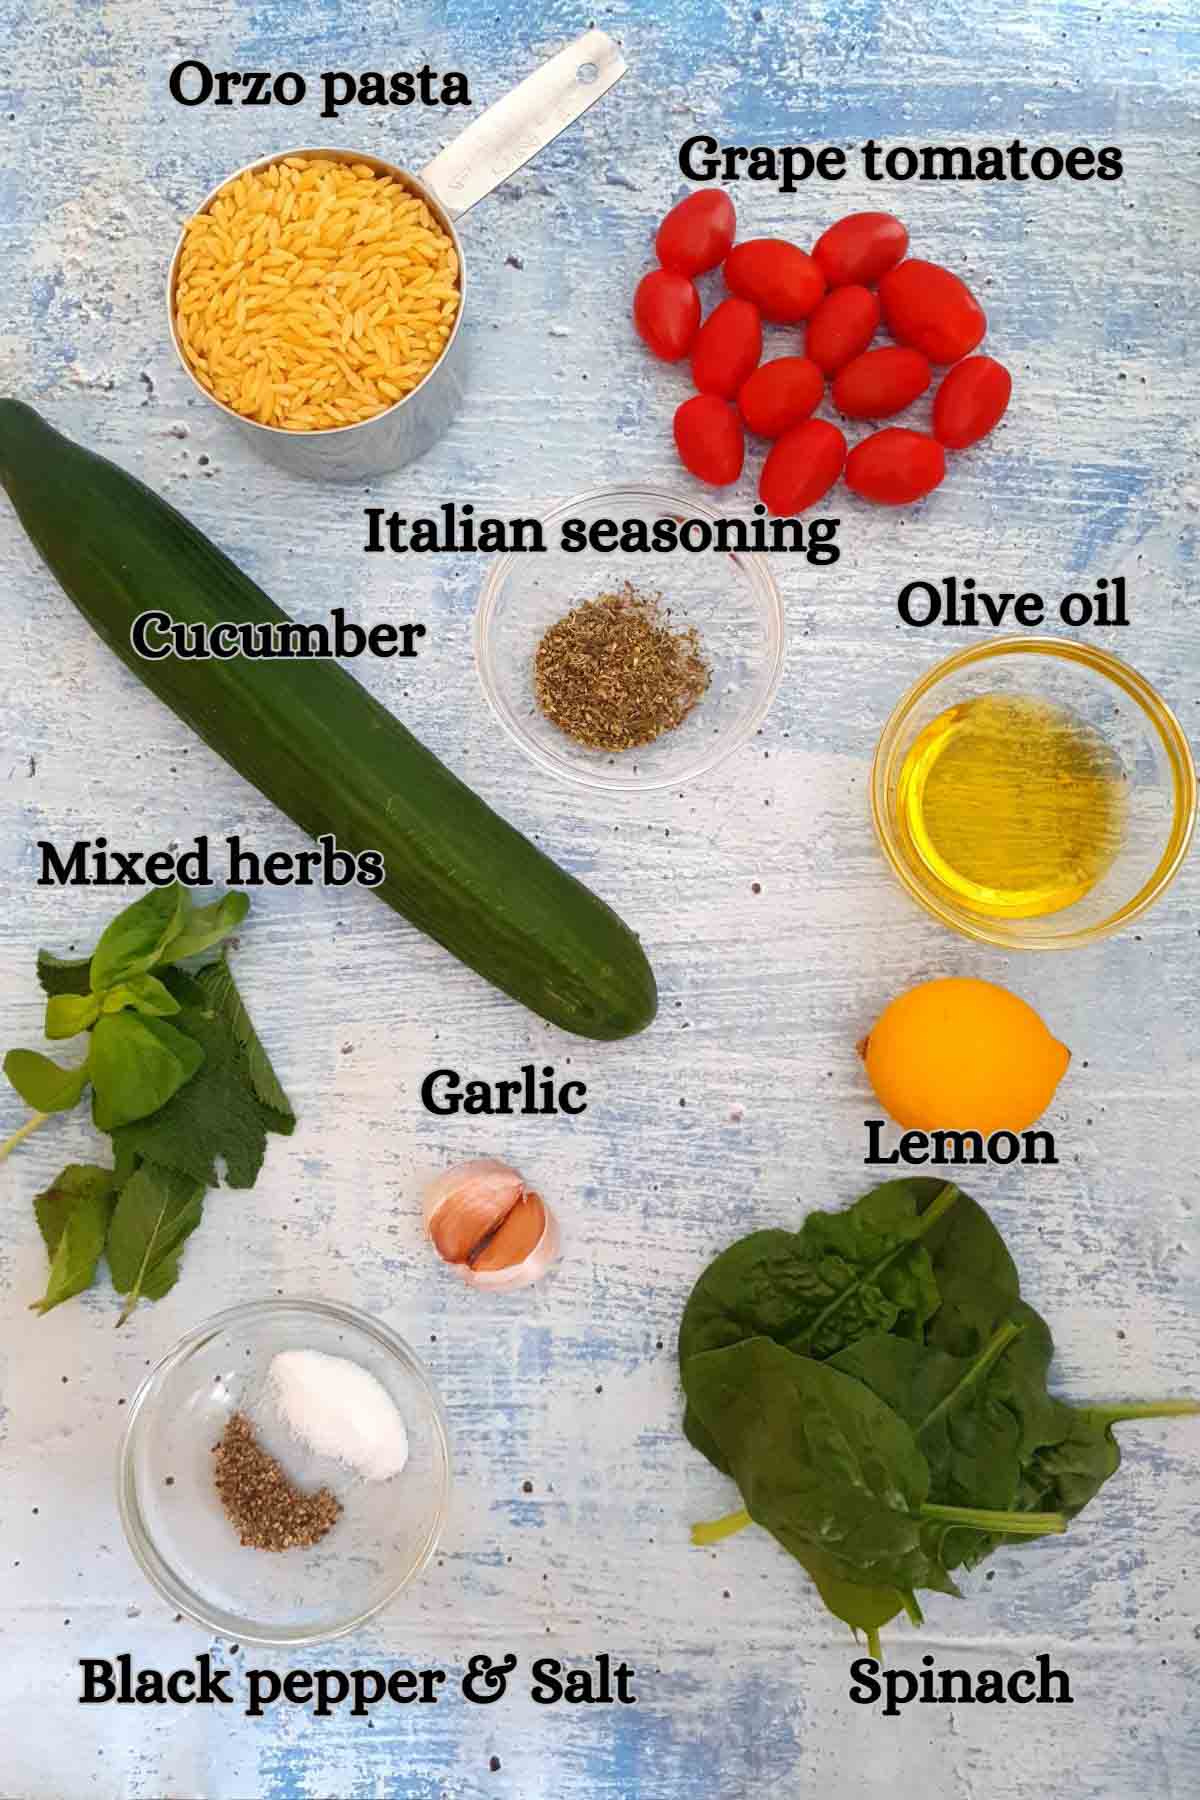 ingredients of orzo pasta salad 